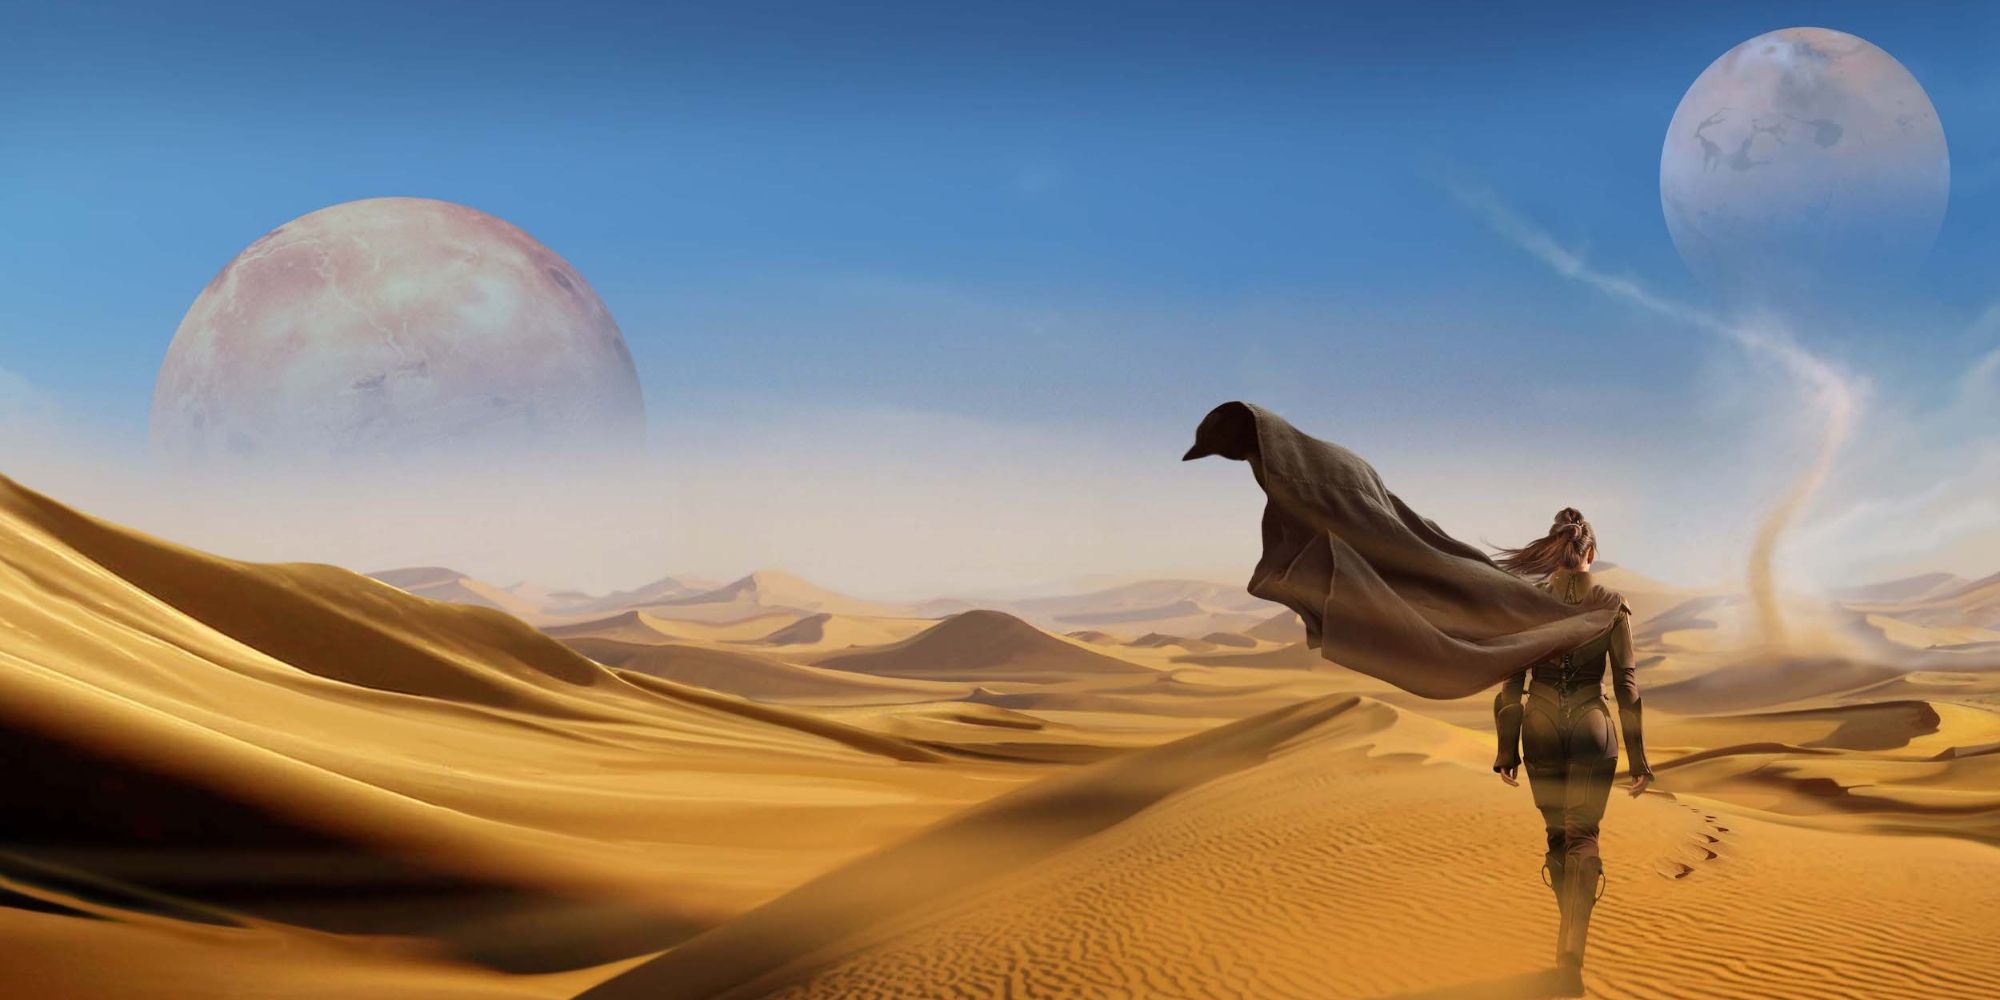 Arrakis in Dune